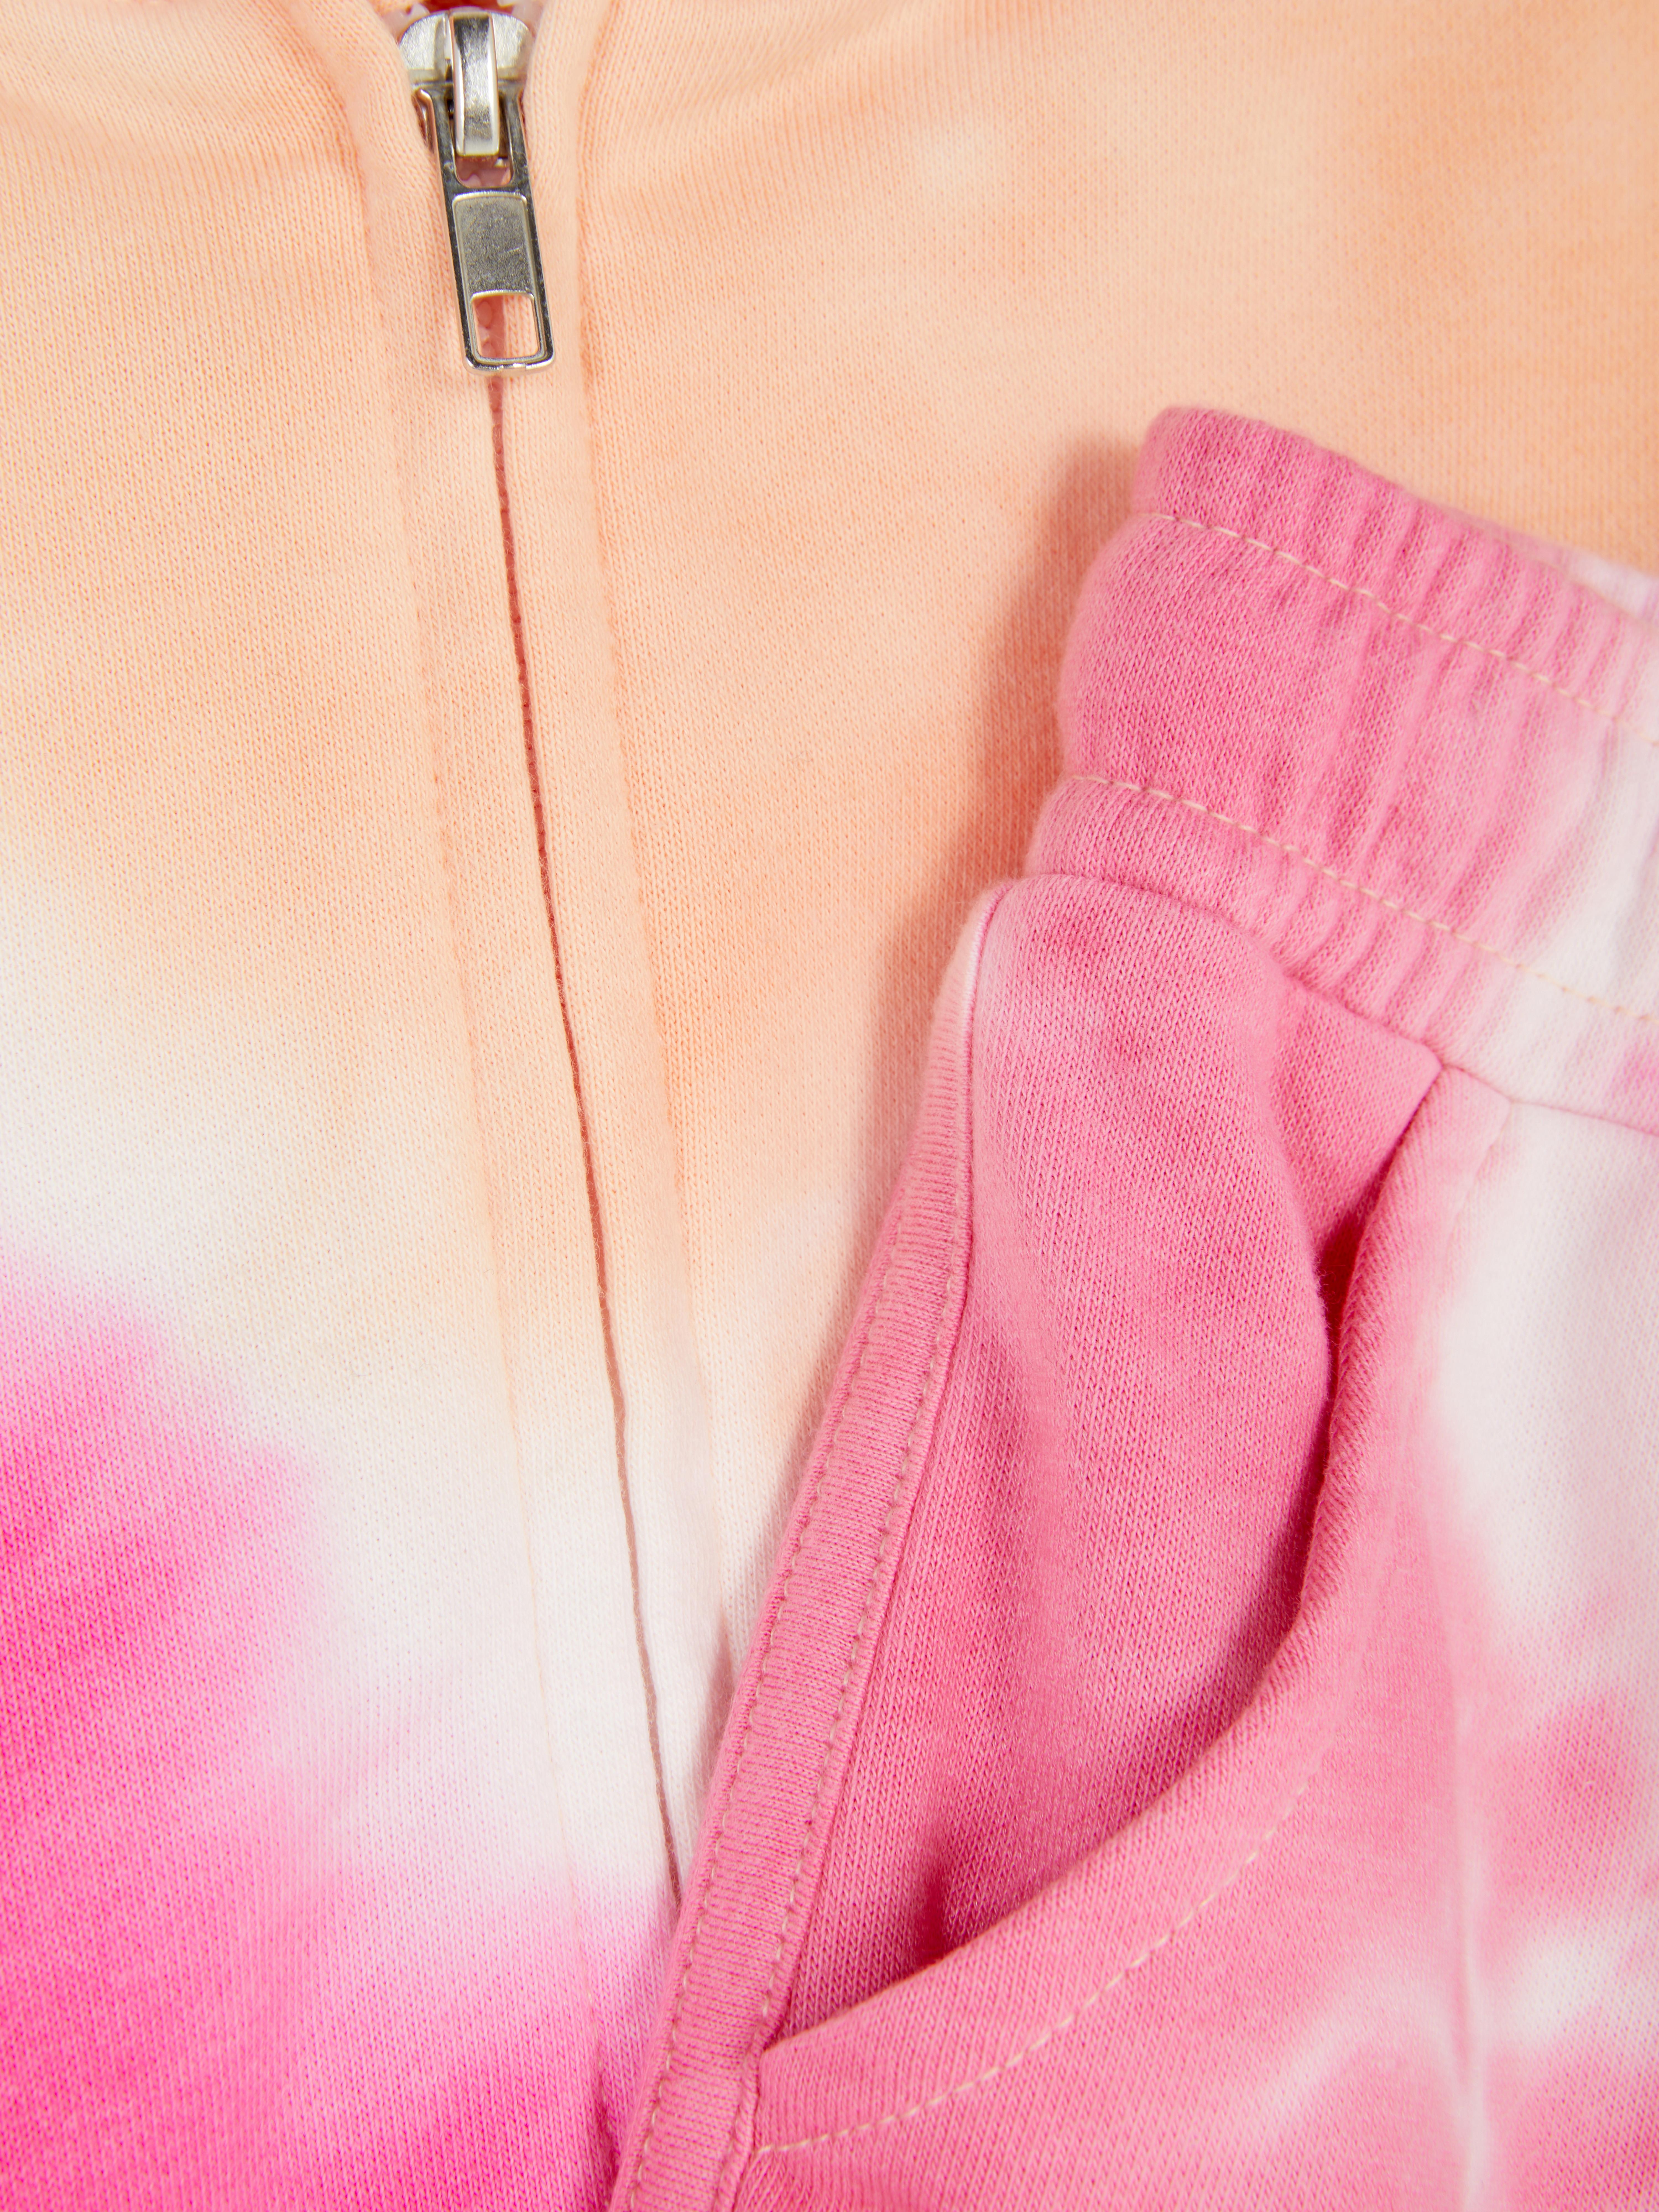 Cotton:On set super soft sleep shorts in pink tie dye print